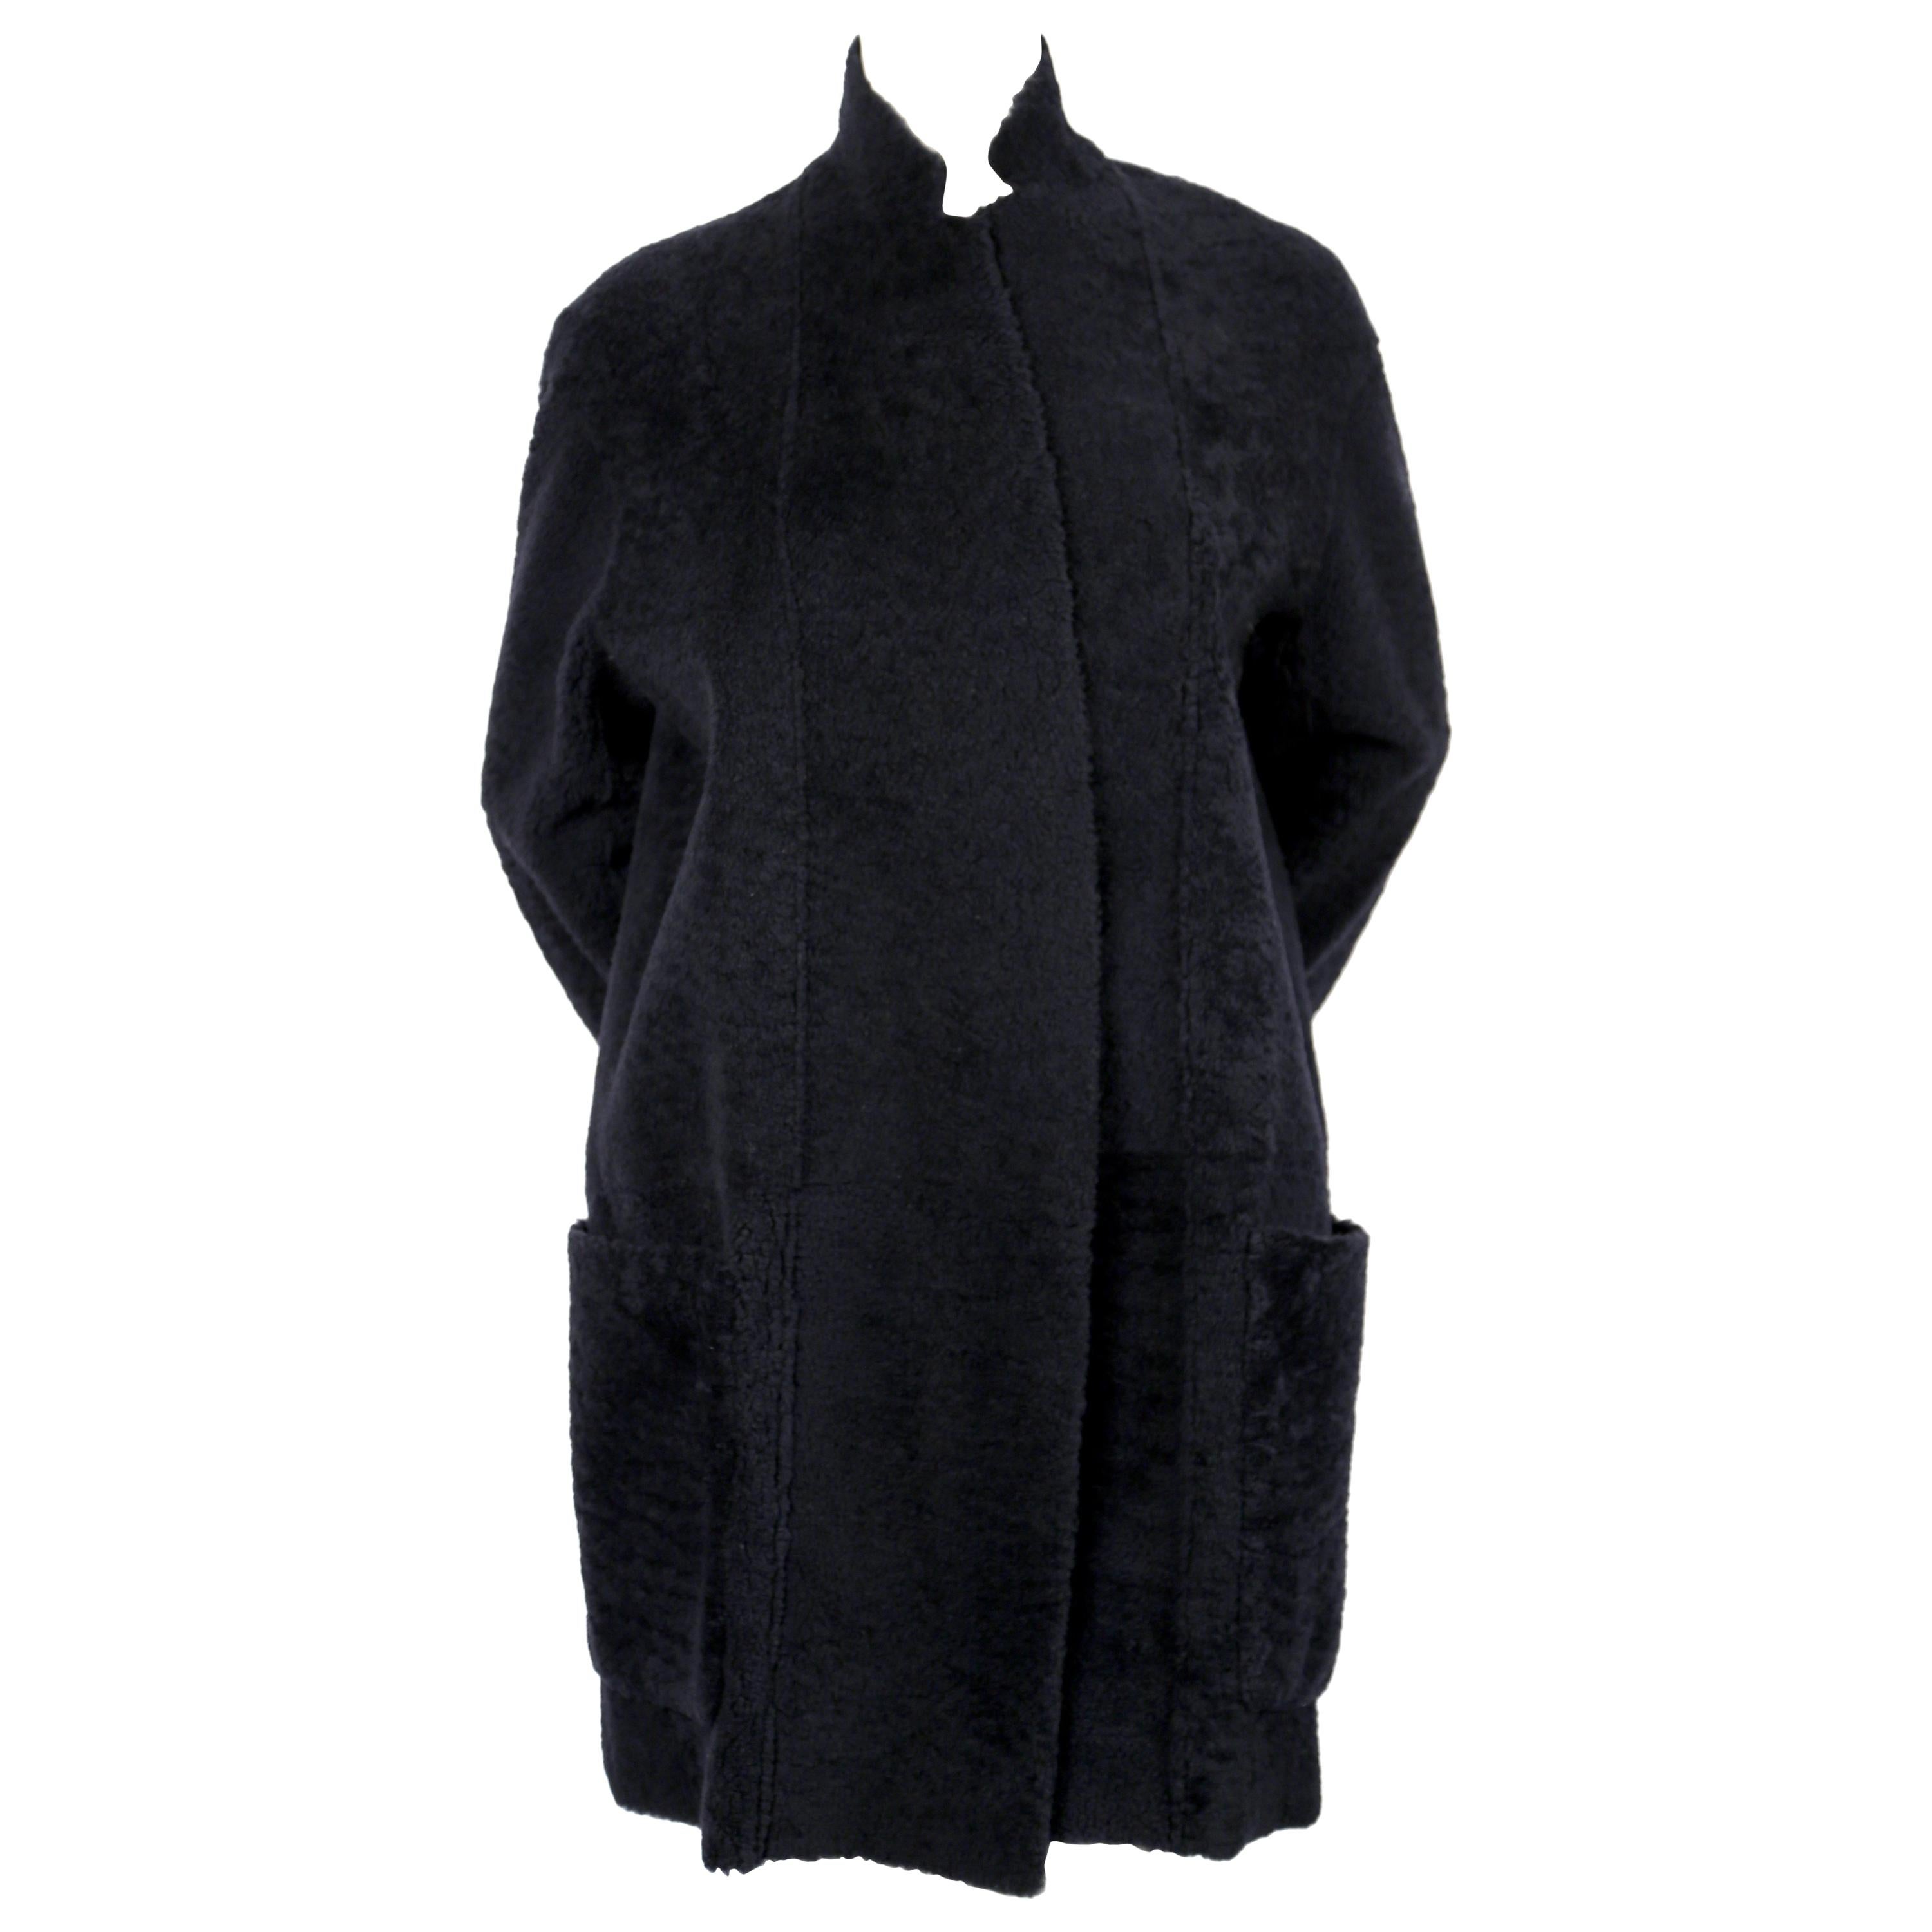 CELINE by PHOEBE PHILO navy blue shearling coat